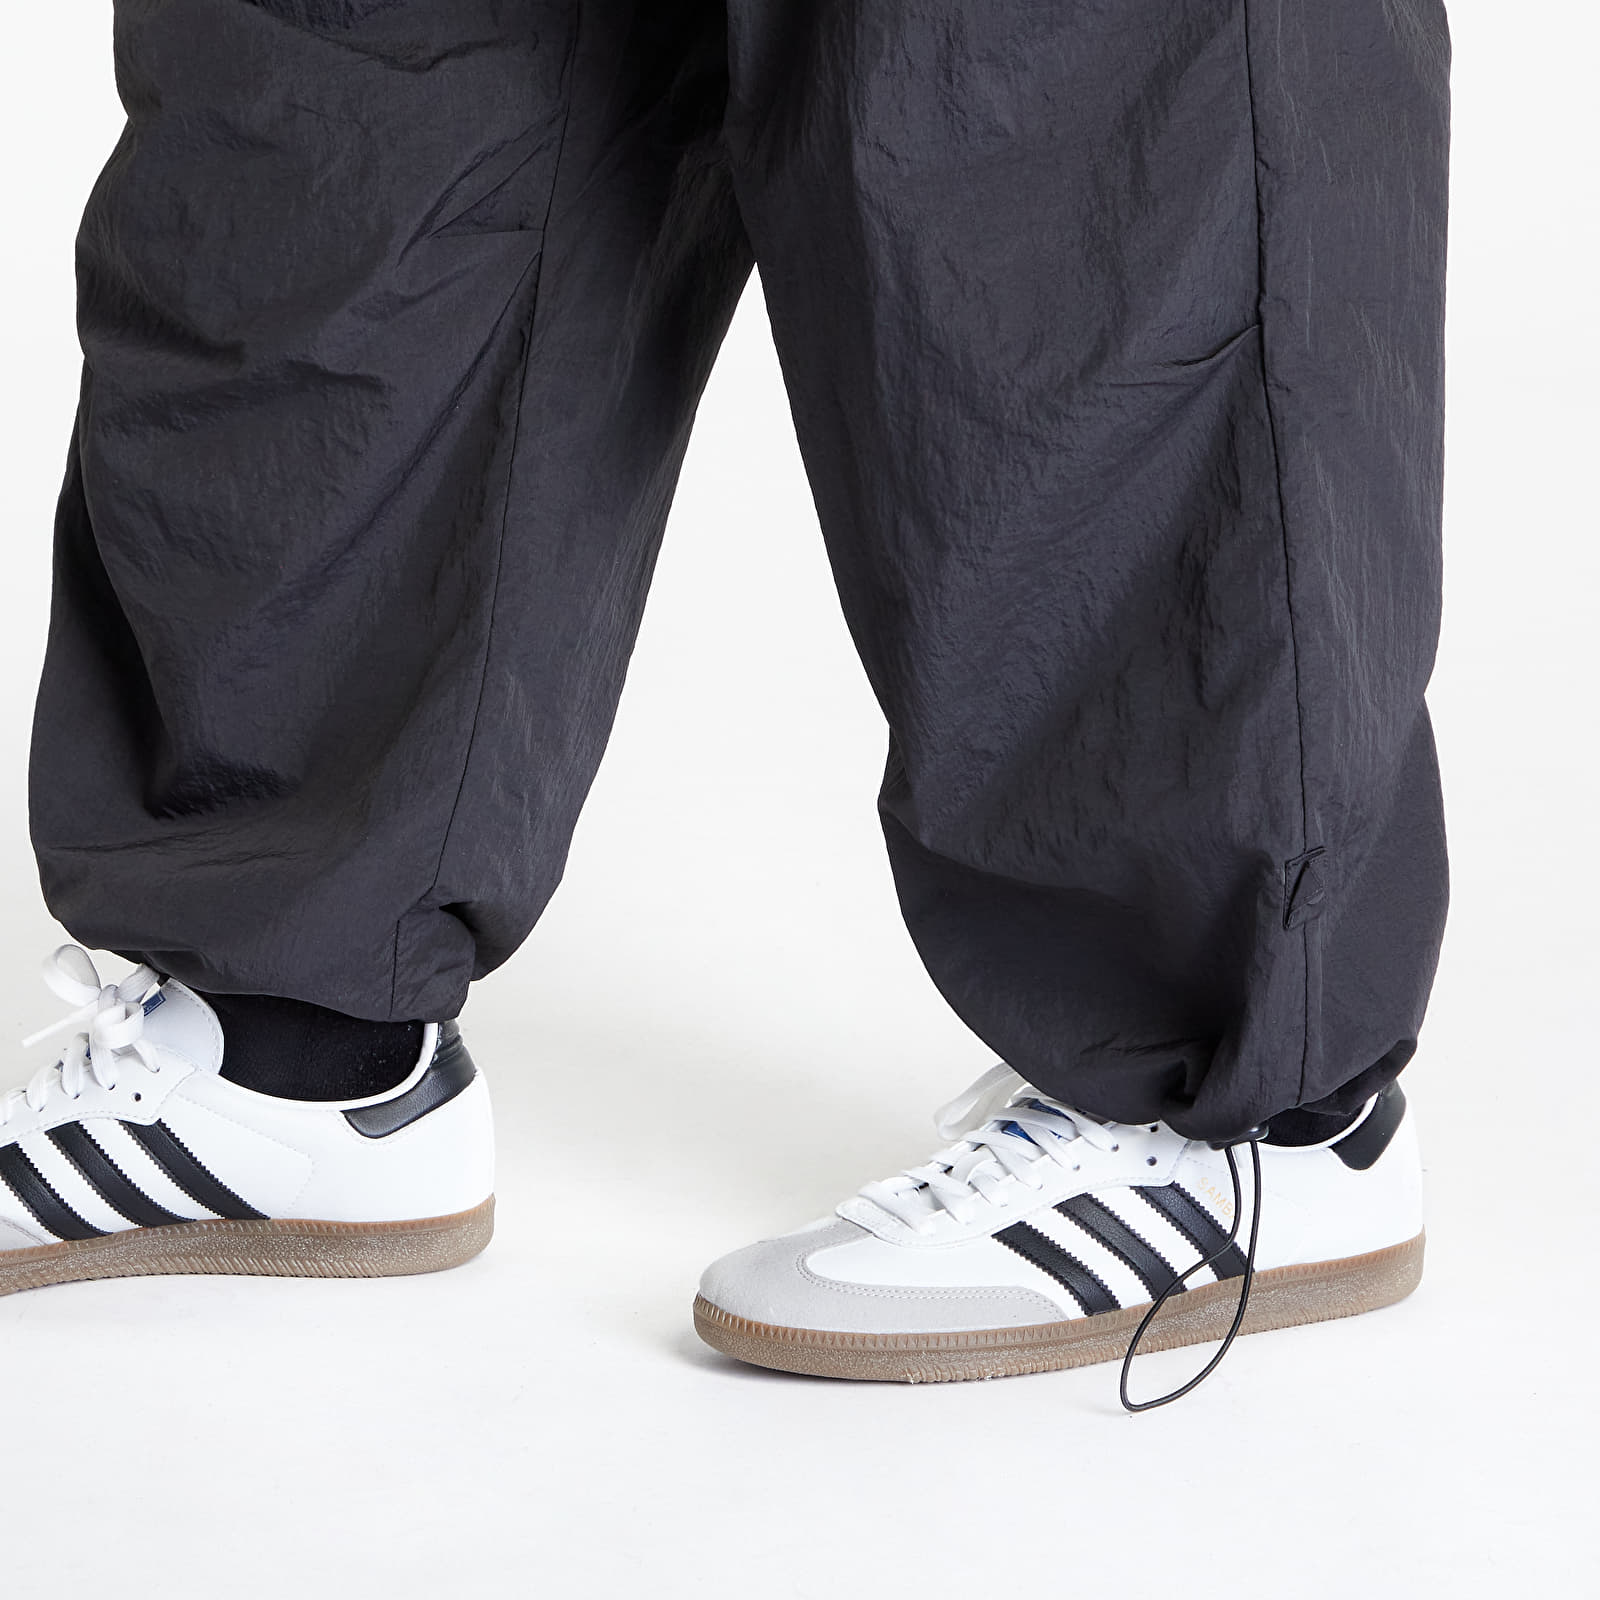 Parachute Nylon jeans and | Urban Queens Classics Pants Pants Black